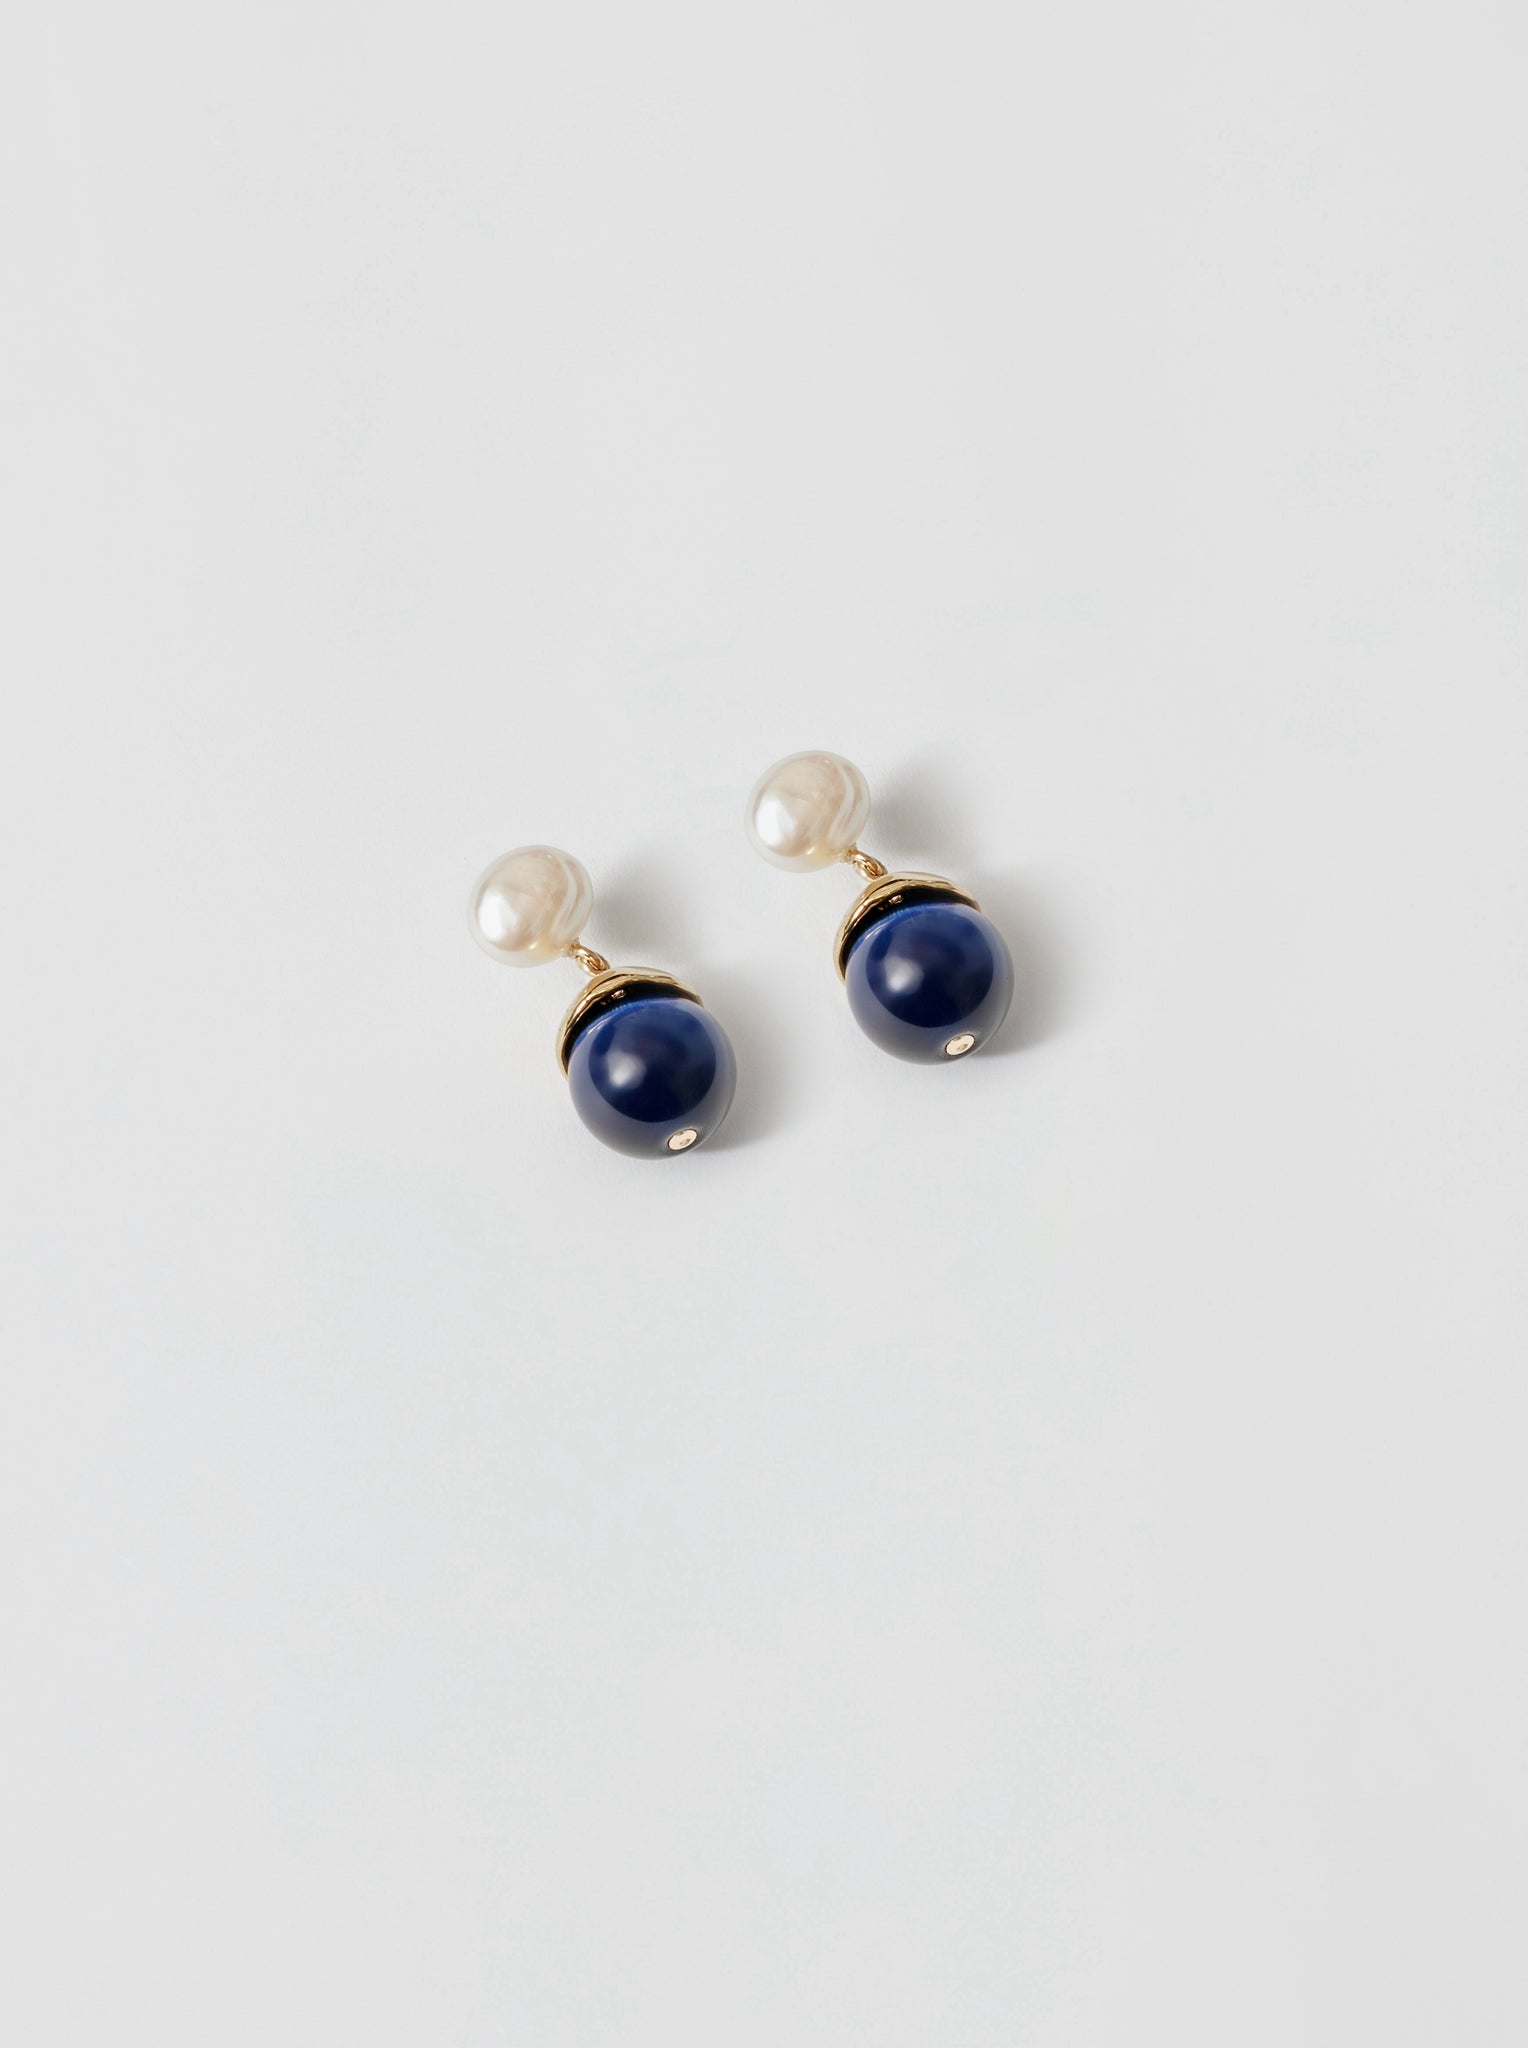 Wolf Circus Pearl Drop Earrings w/ Blue Glass Bead in 14k Gold Plated | Maude Earrings-Earrings-wolfcircus.com